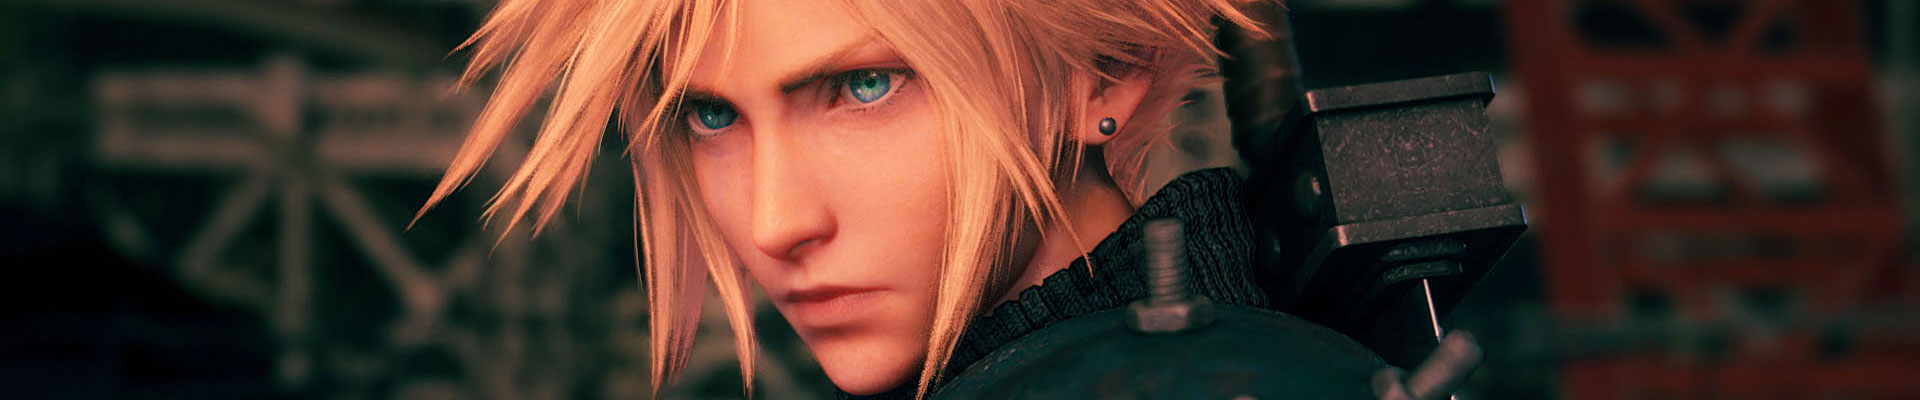 Final Fantasy VII Remake Game Guide